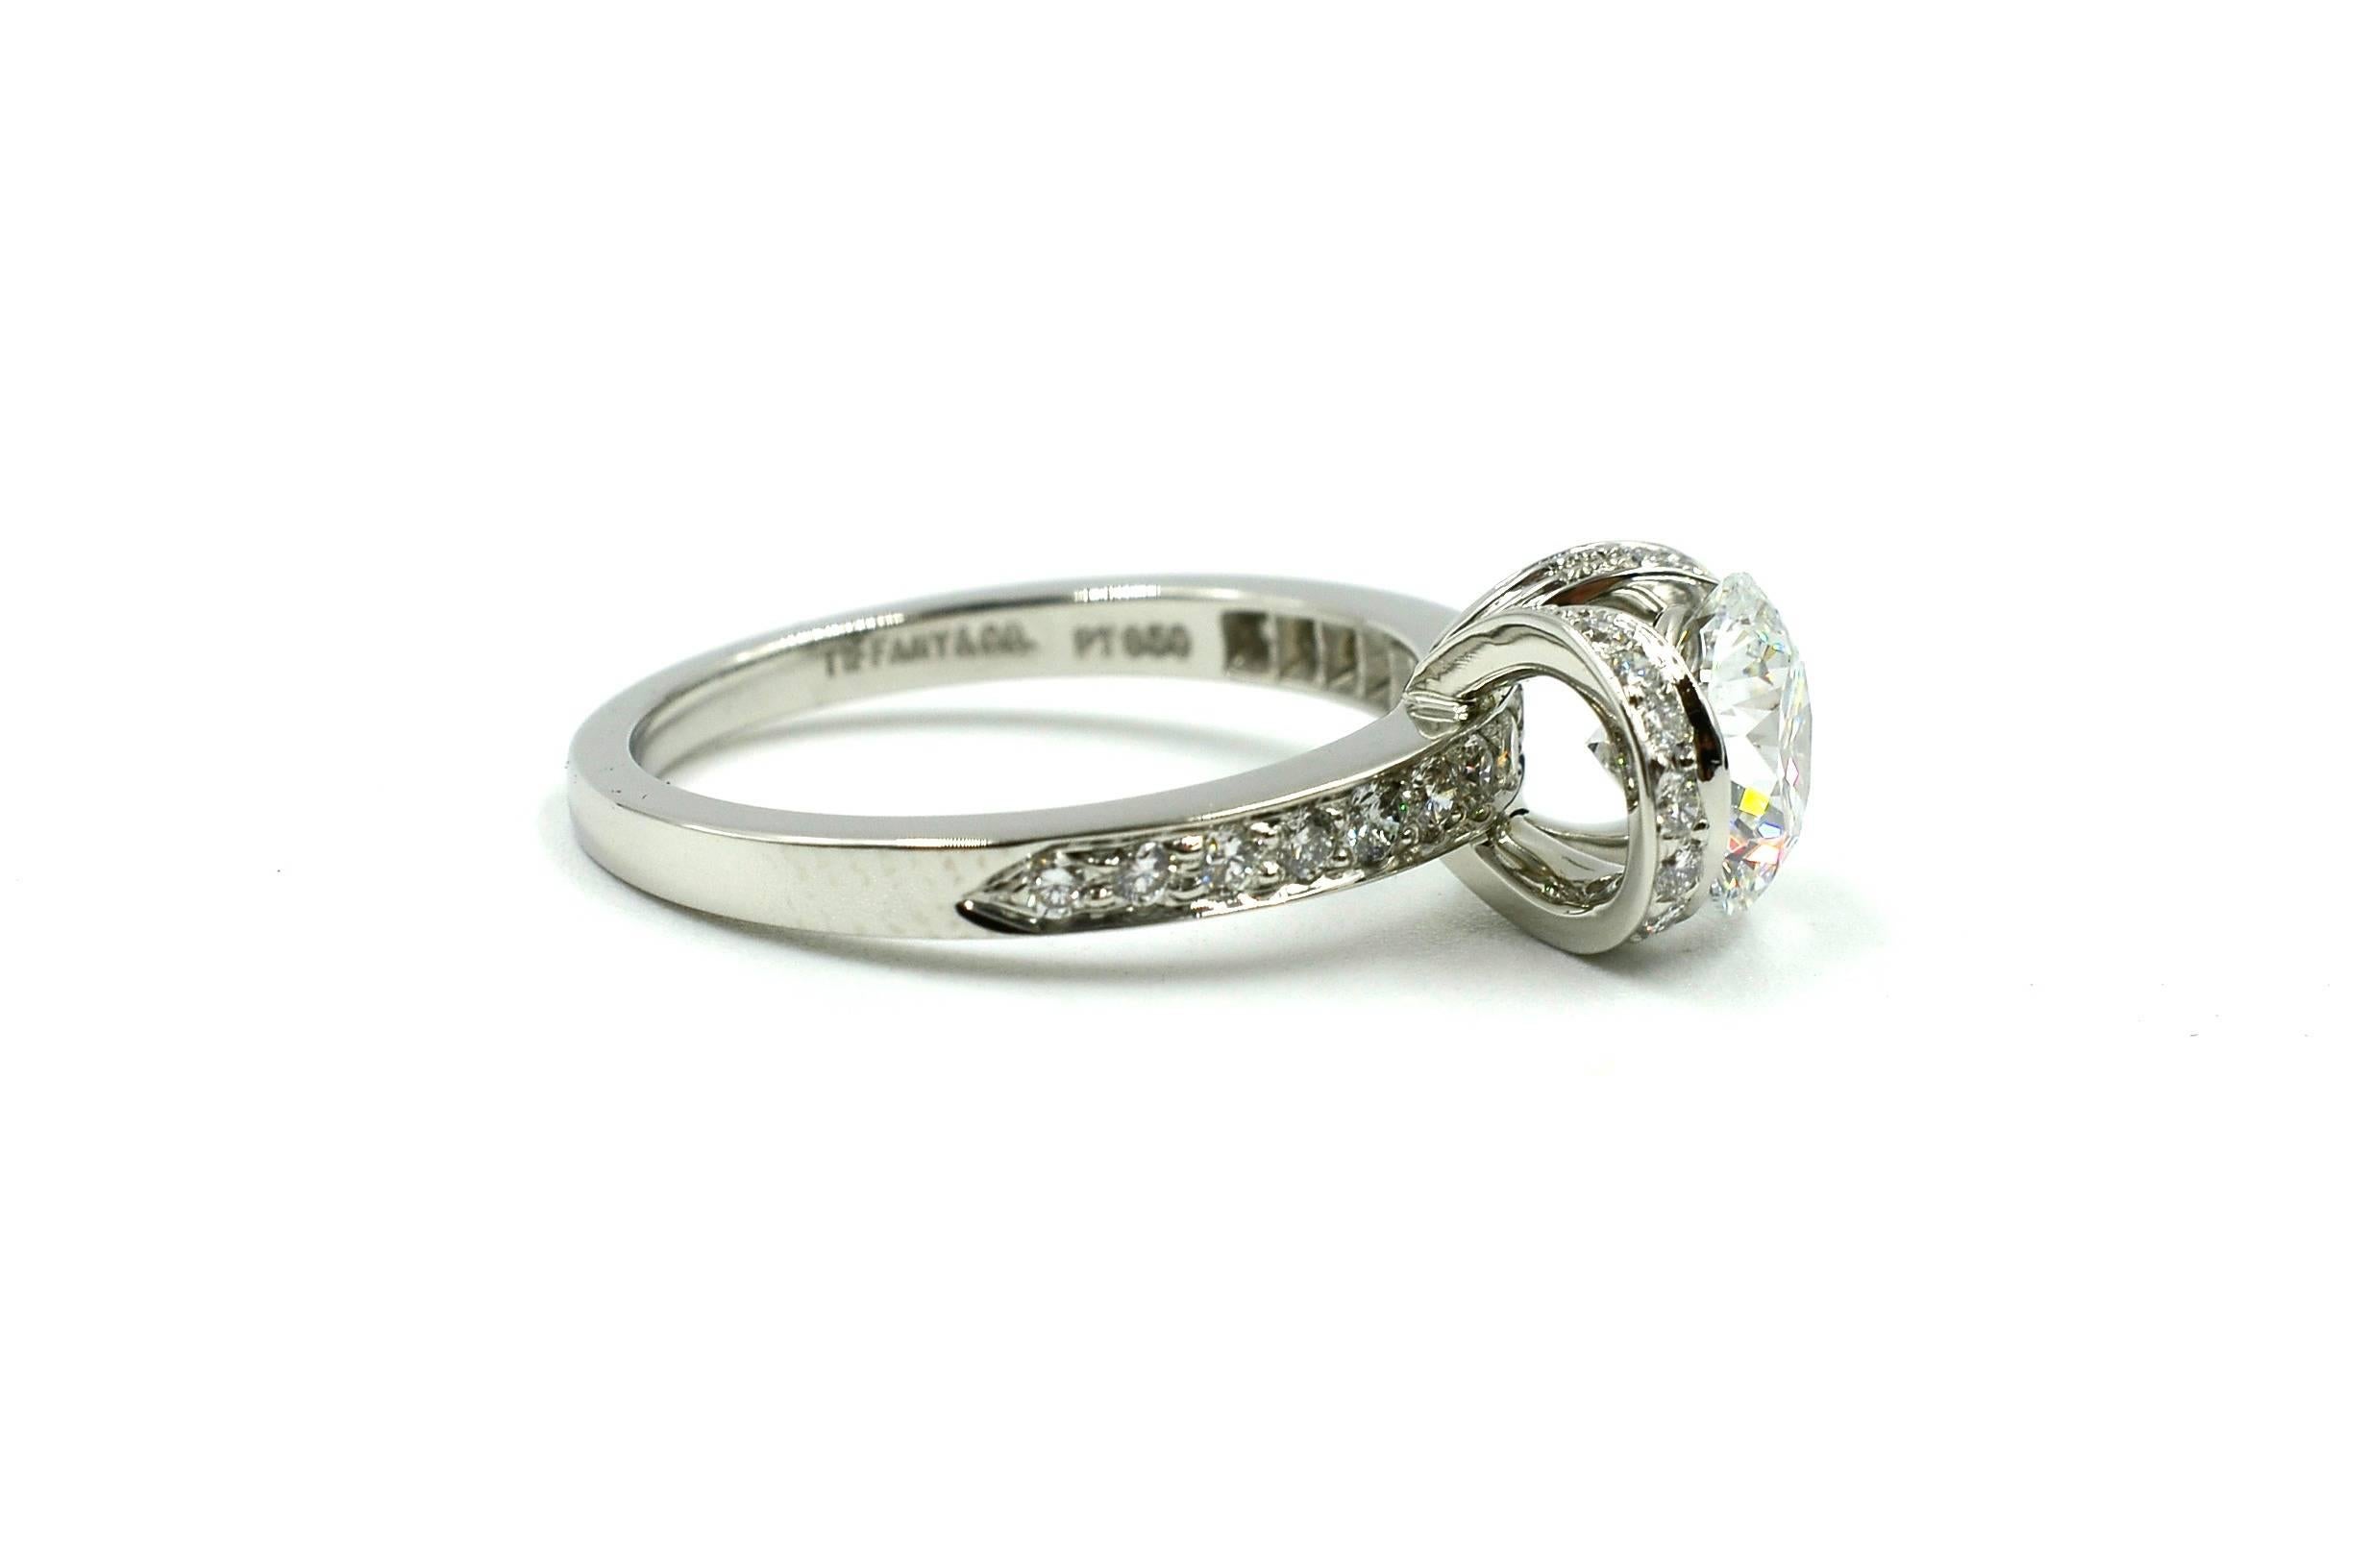 Brand: Tiffany & Co

Metal: Platinum

Style: Round Brilliant Ribbon Ring

Diamond Size: 1.21ct 

Diamond Color: D

Diamond Clarity: VS1.

Ring Size: 5

Tiffany Papers: Yes

Tiffany Box: Yes